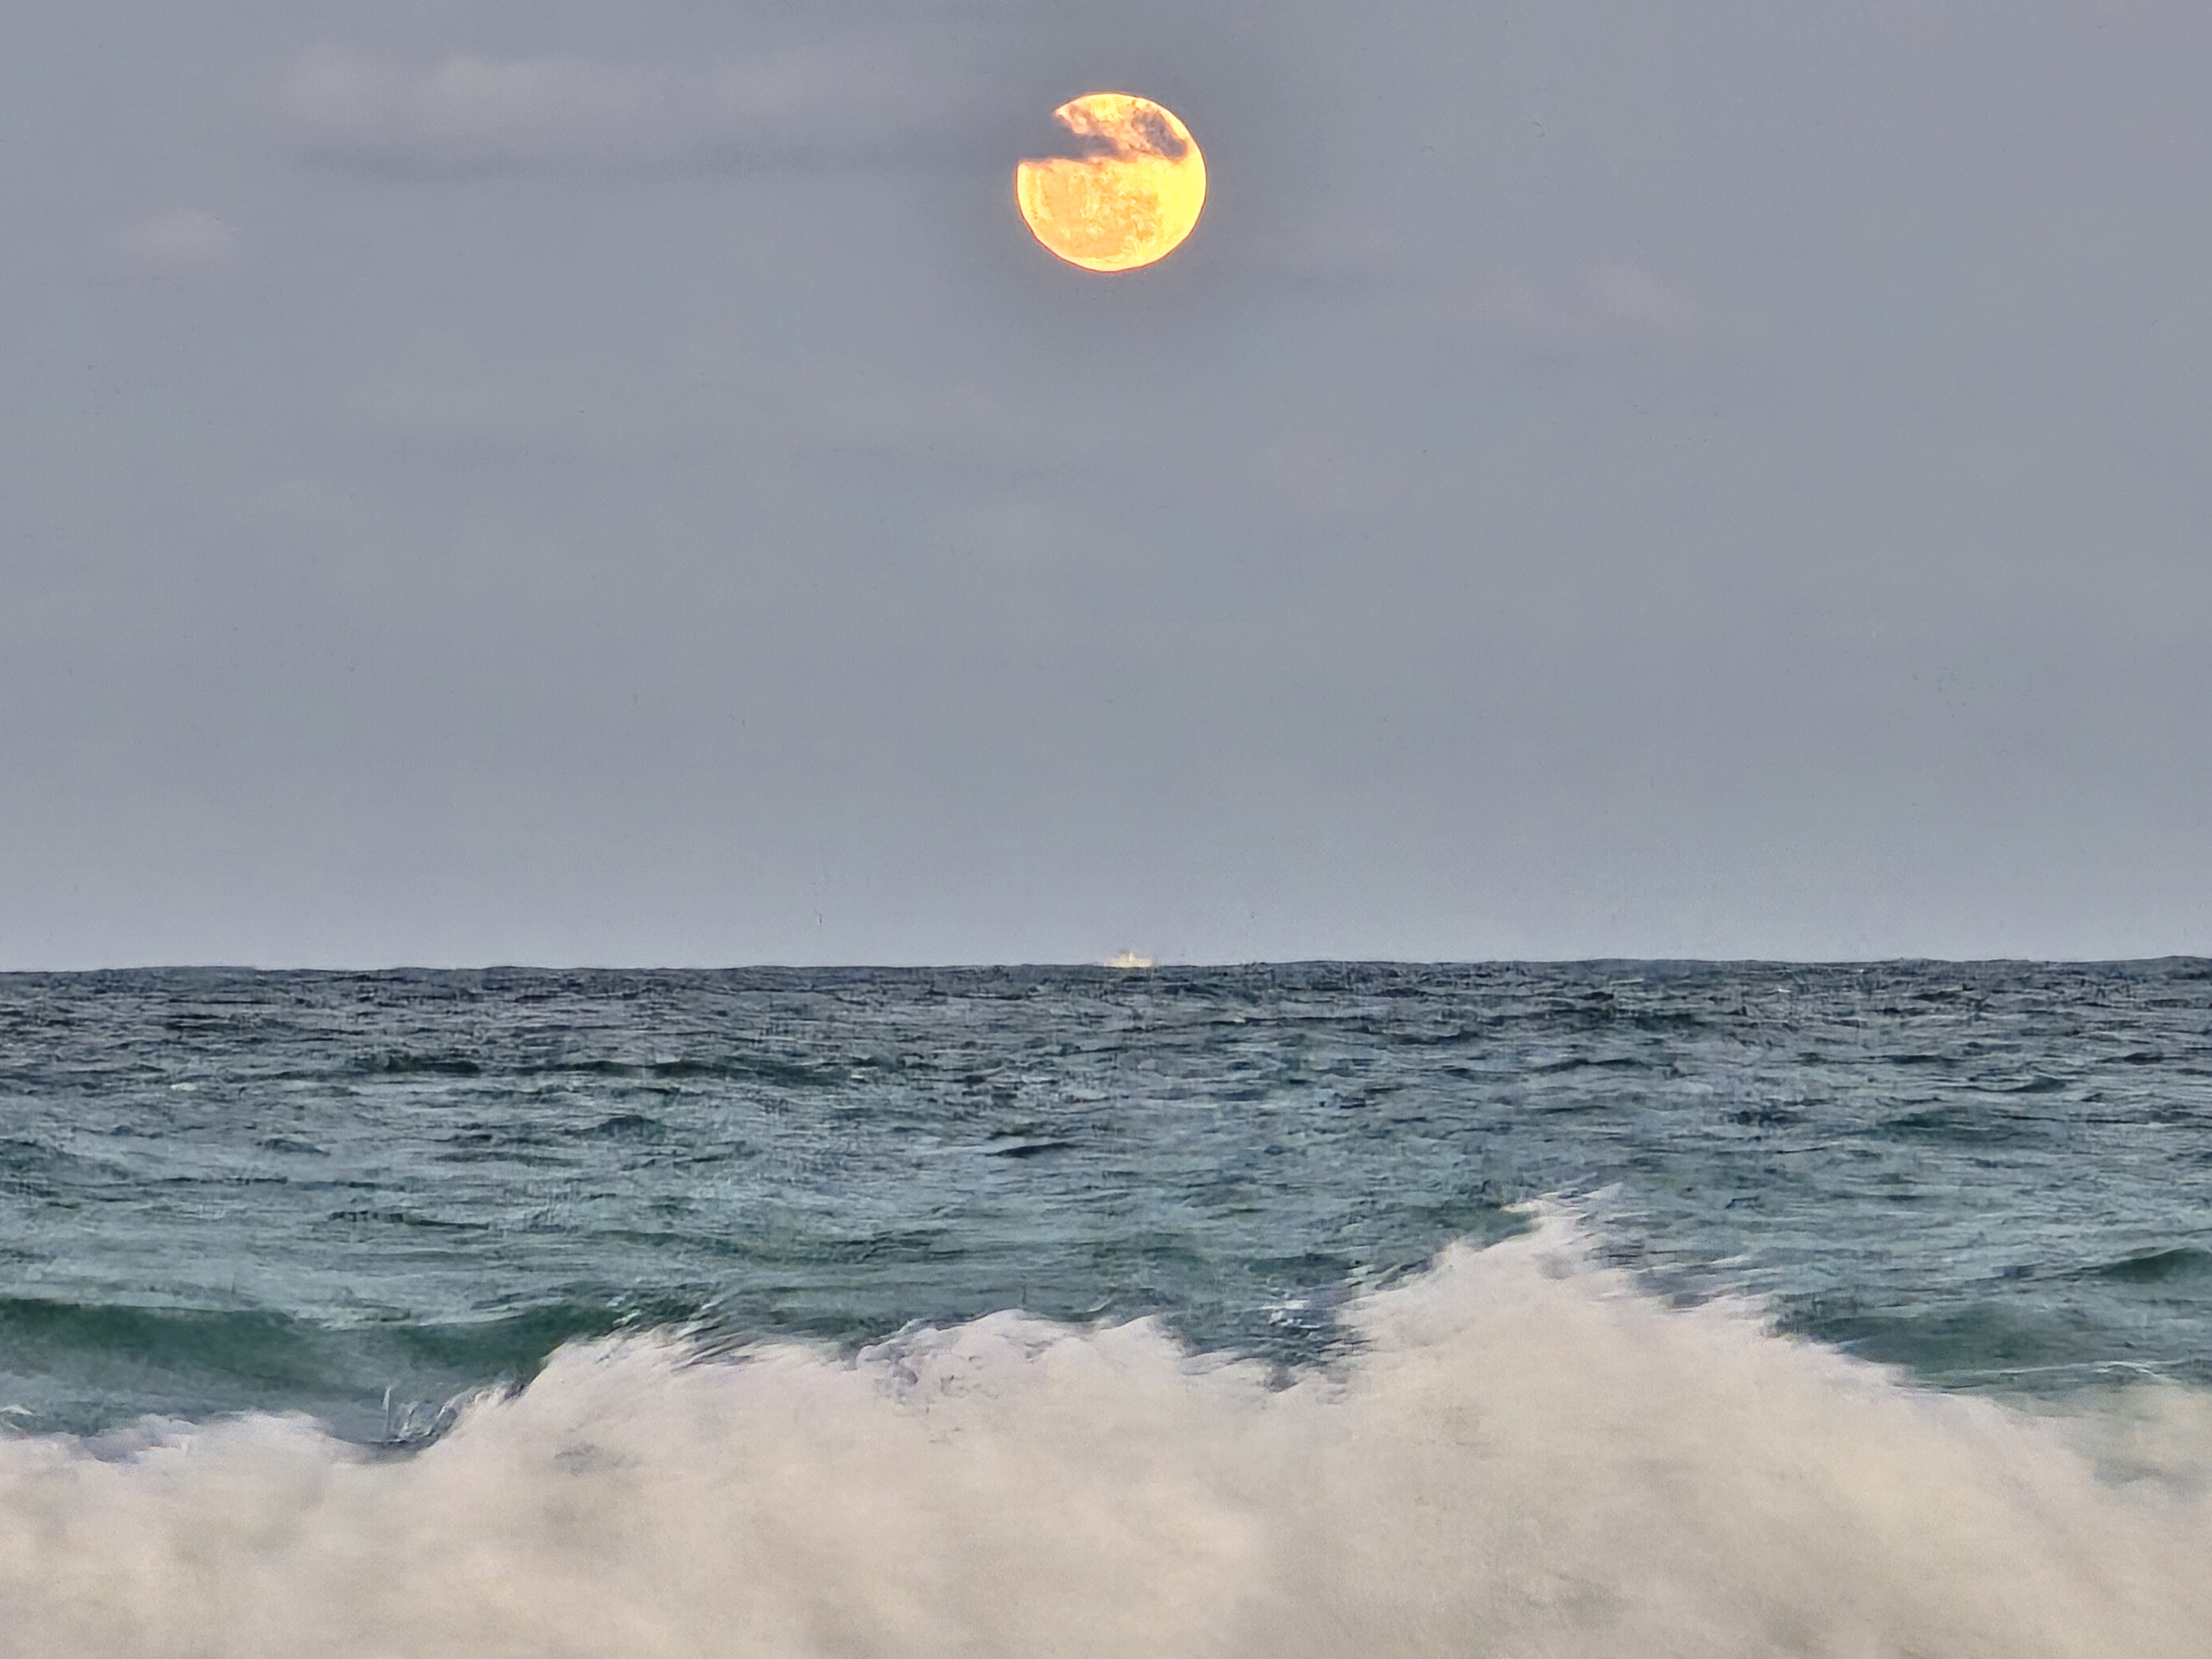 the full moon above an ocean shoreline